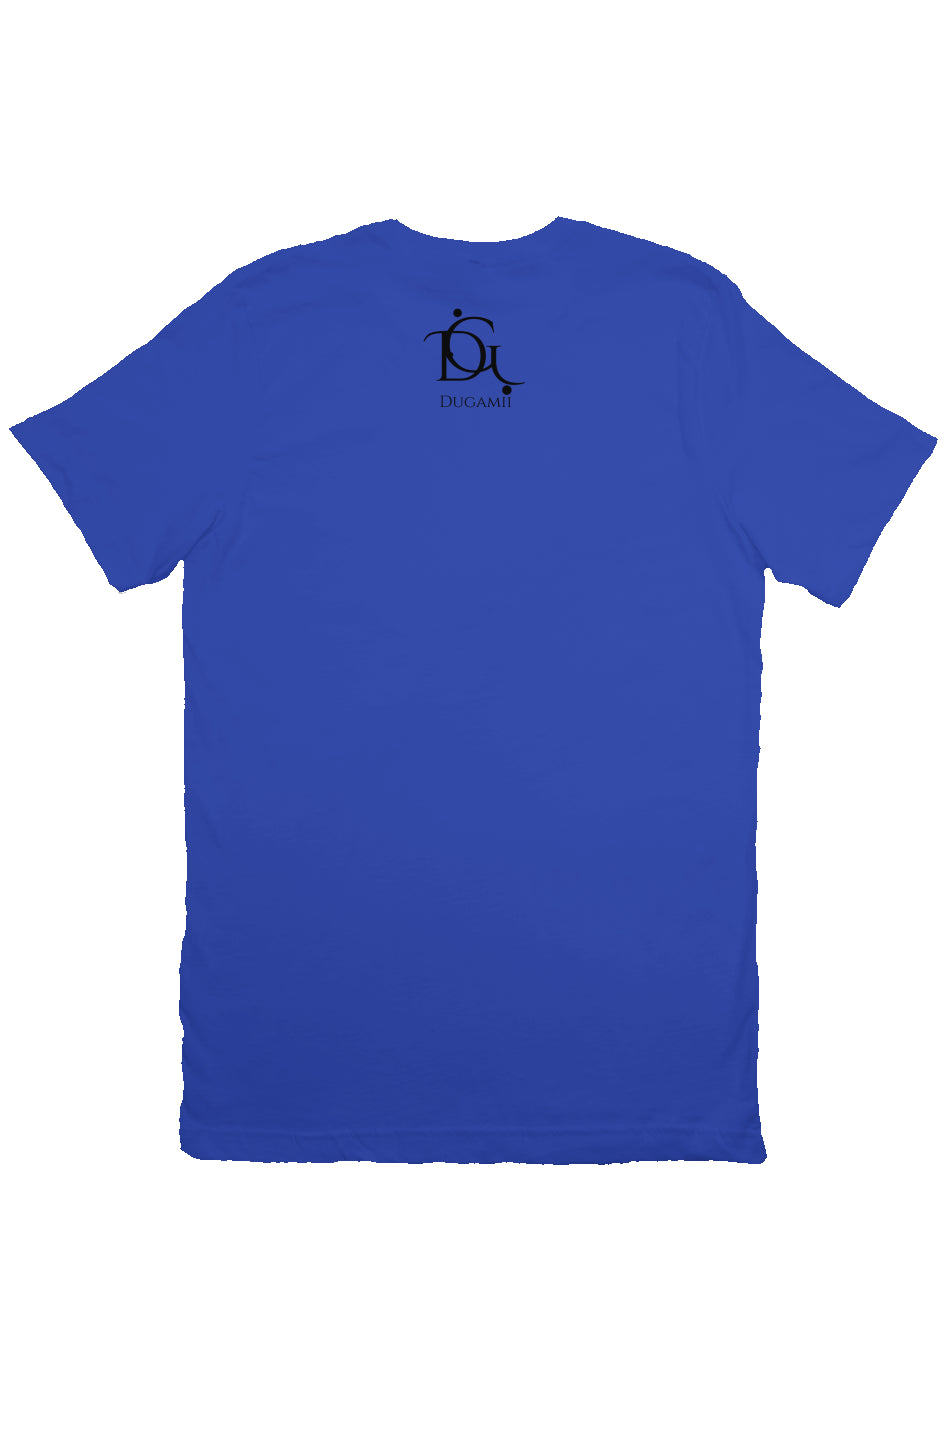 DuGamii "Basquiat Inspired Artwork" Premium Blue T-Shirt